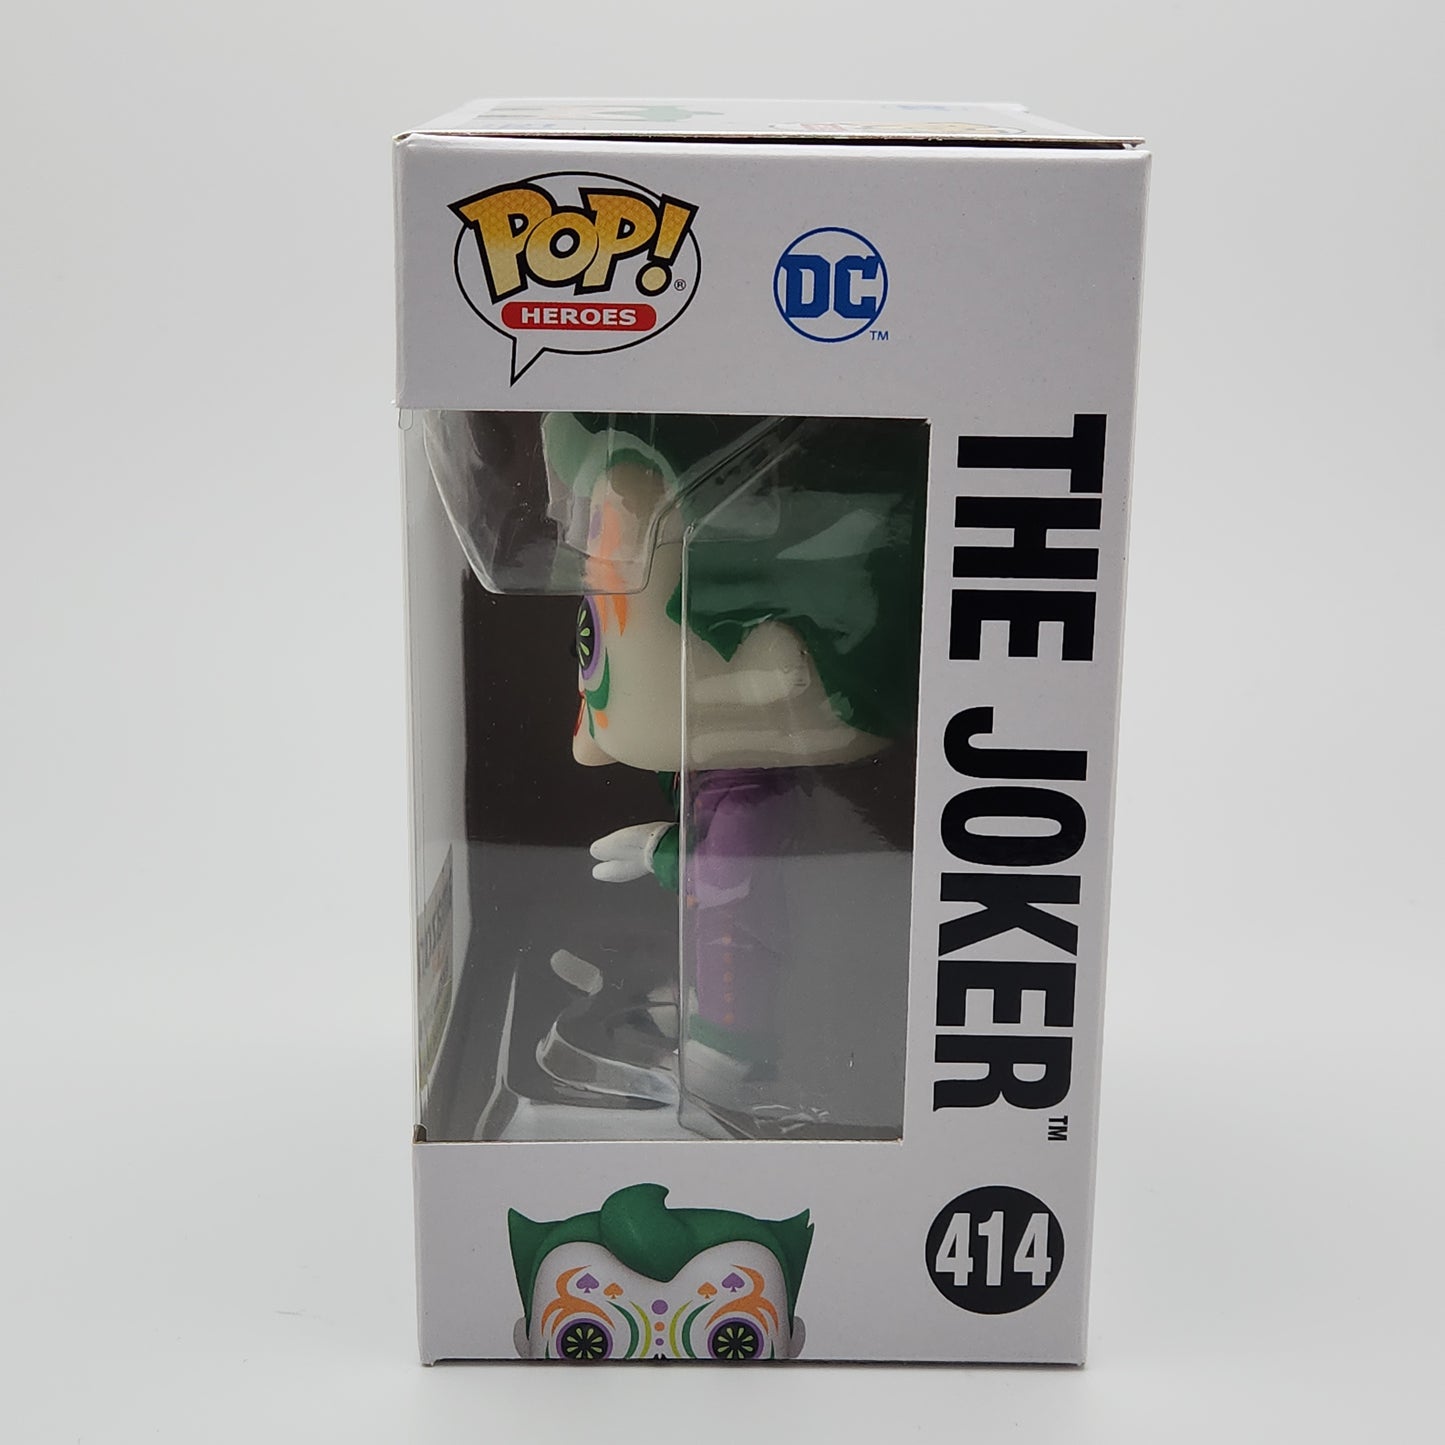 Funko Pop! DC Super Heroes- The Joker (Dia De Los Muertos)